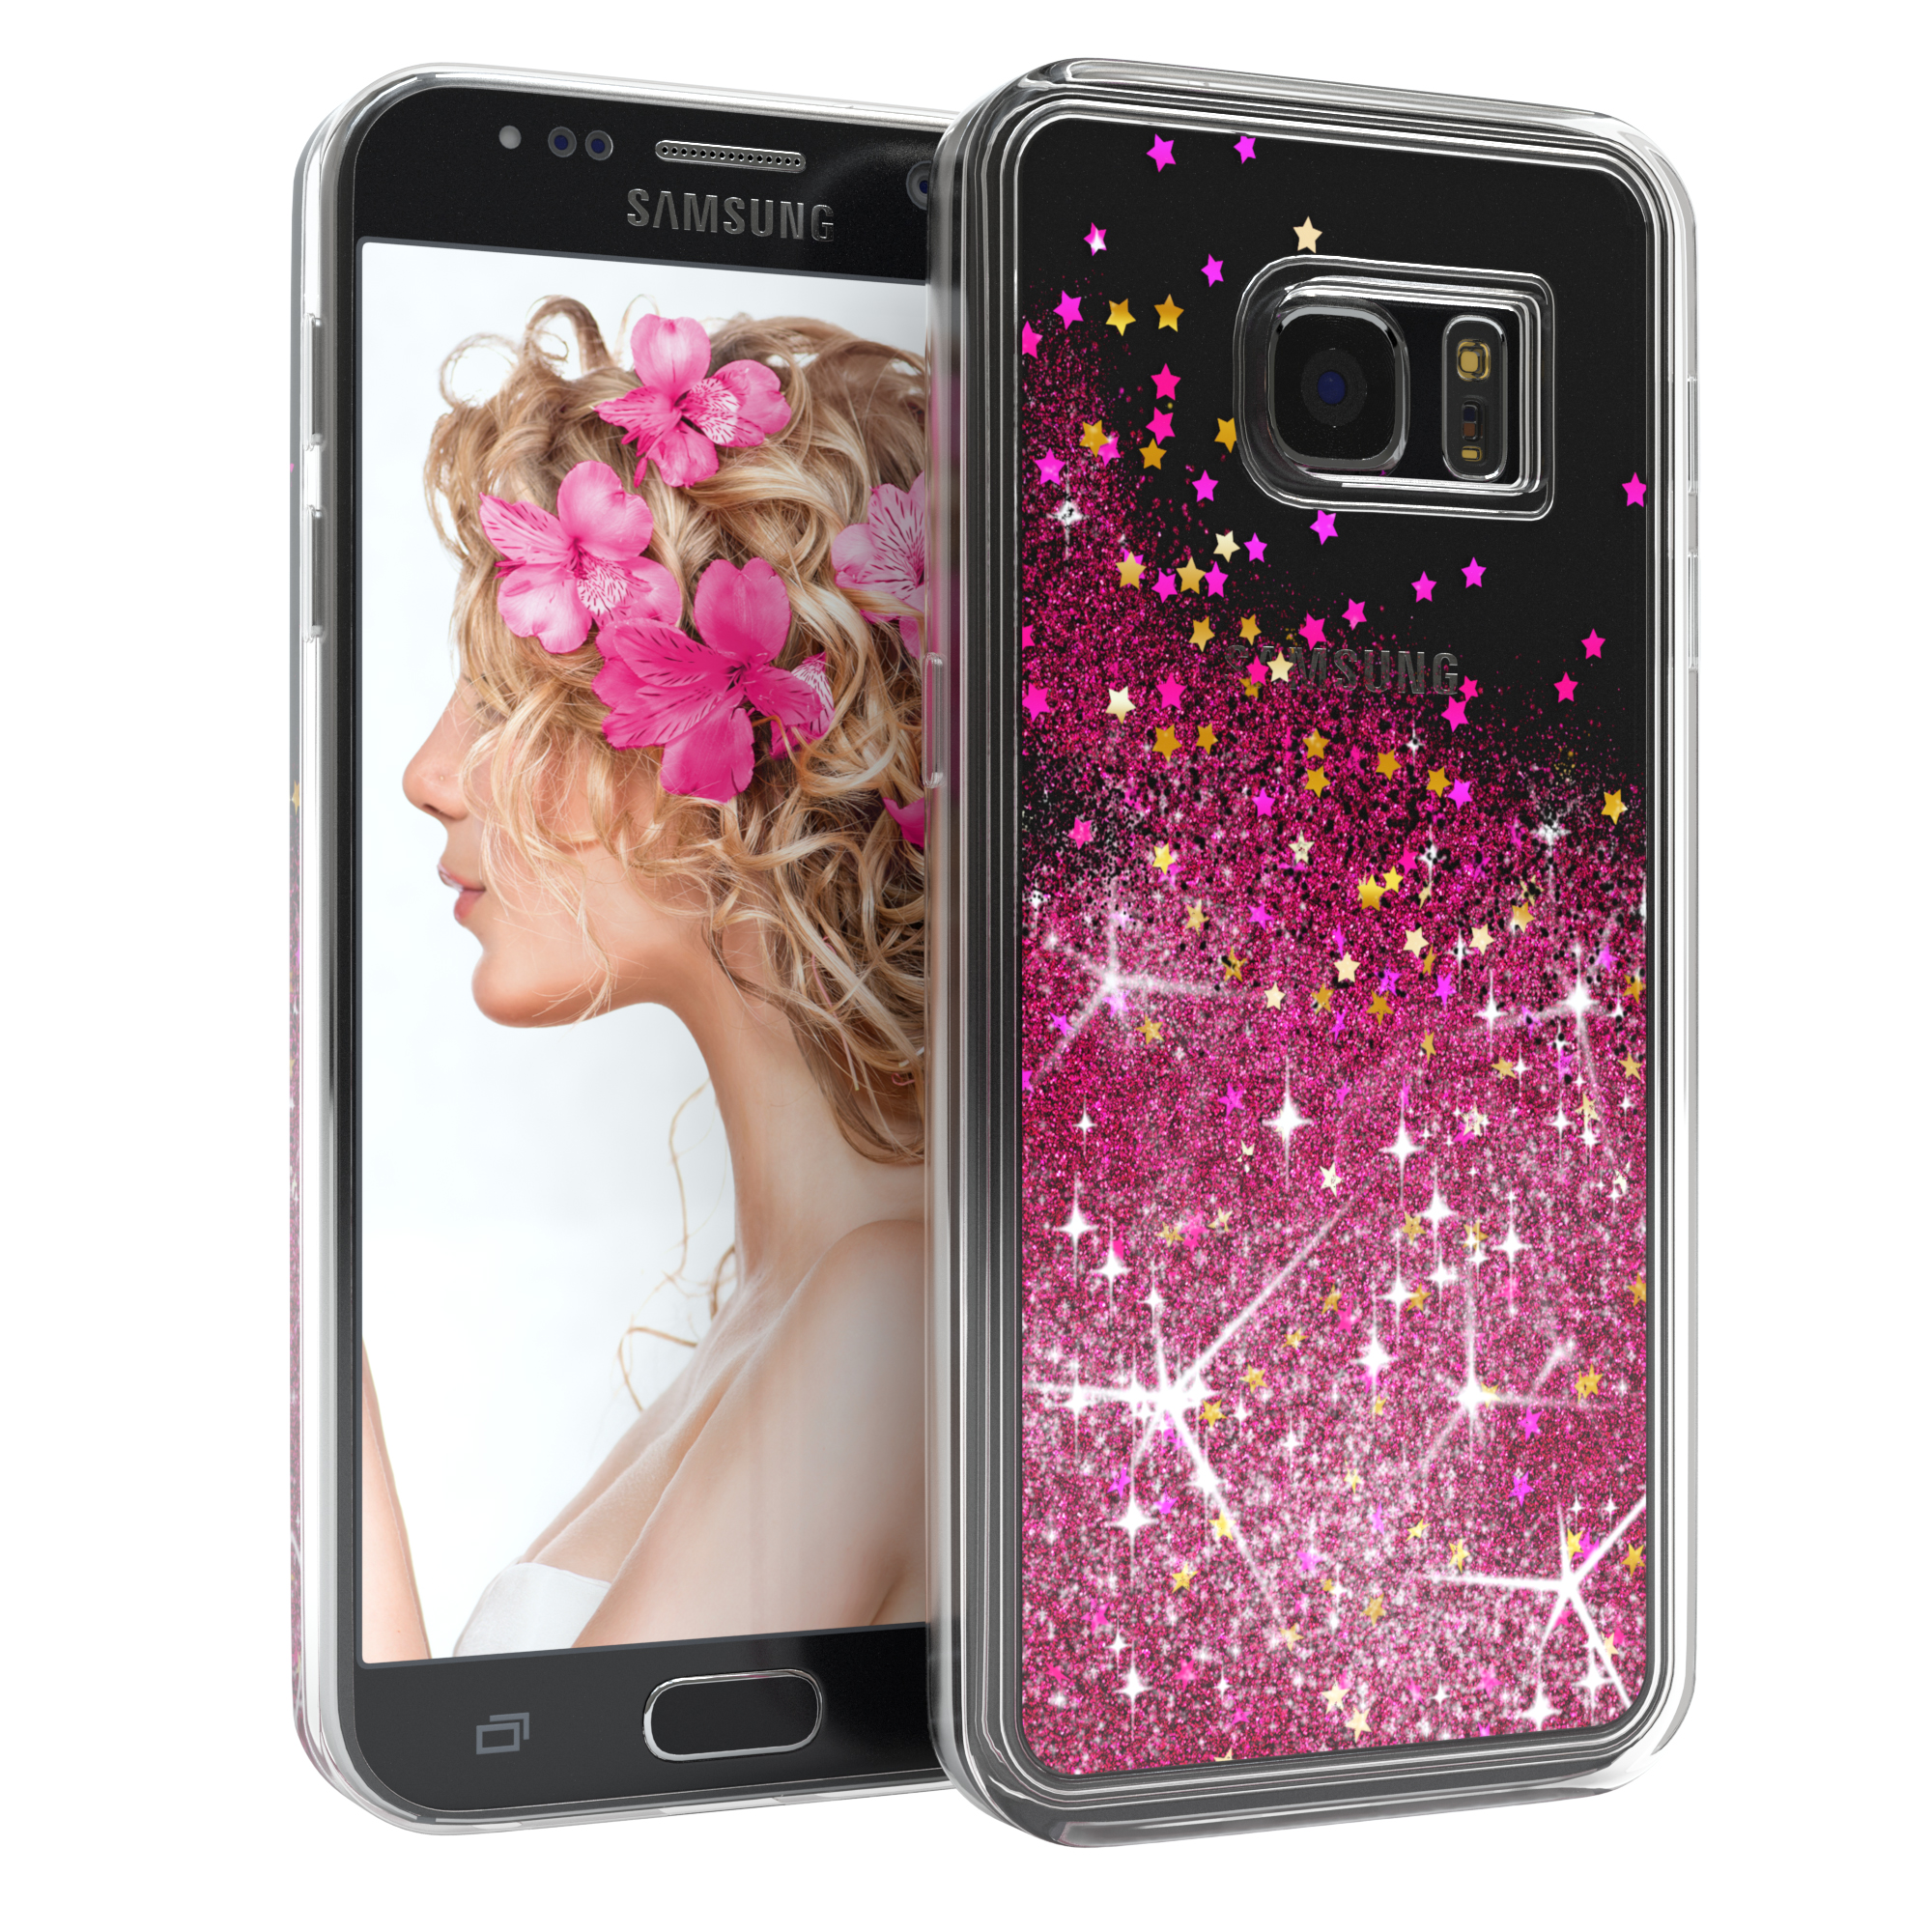 Flüssig, Galaxy Backcover, S7, EAZY CASE Samsung, Glitzerhülle Pink